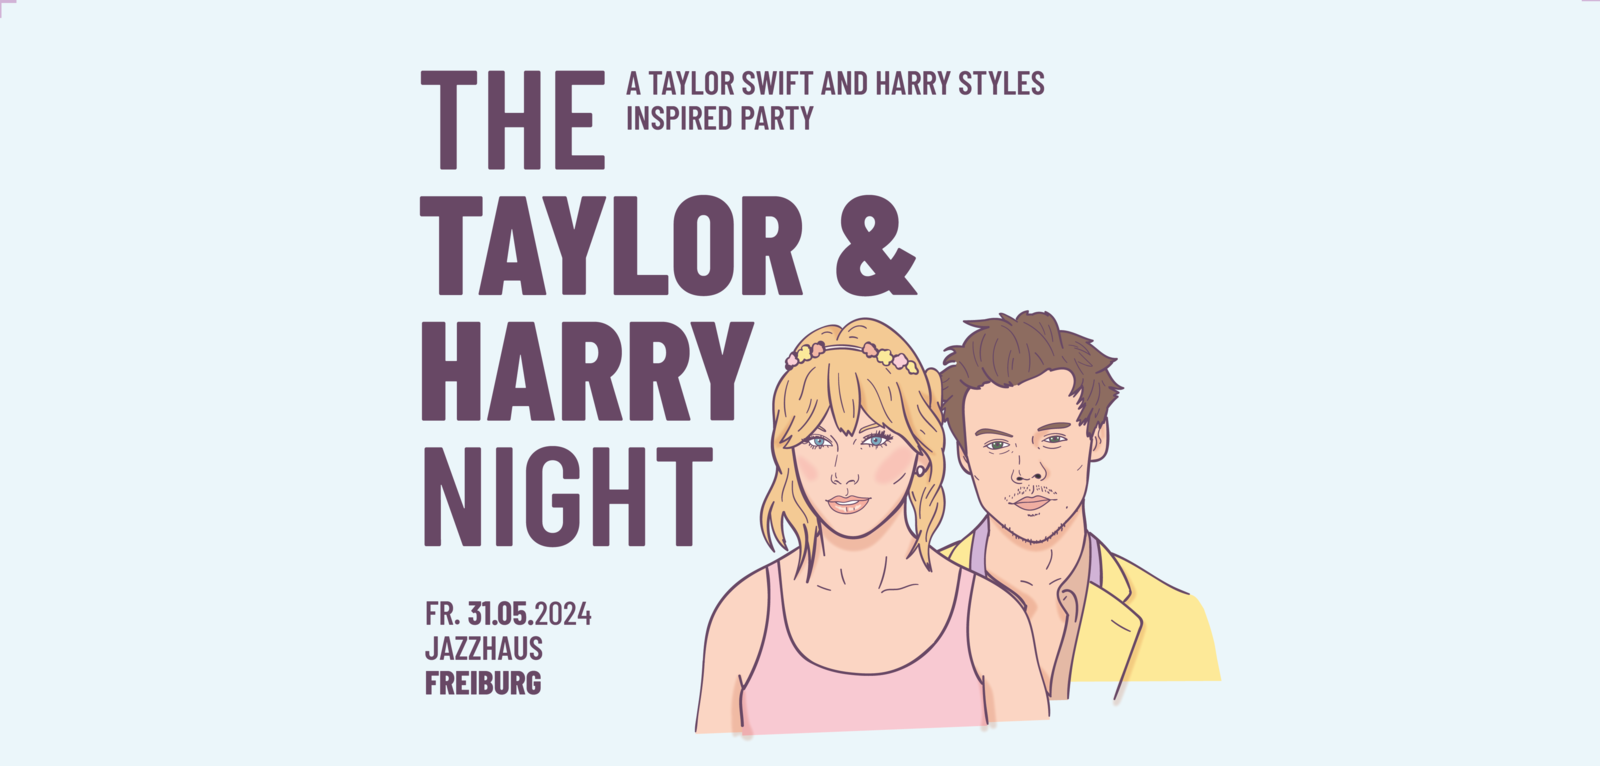 Bild zu: The Taylor & Harry Night